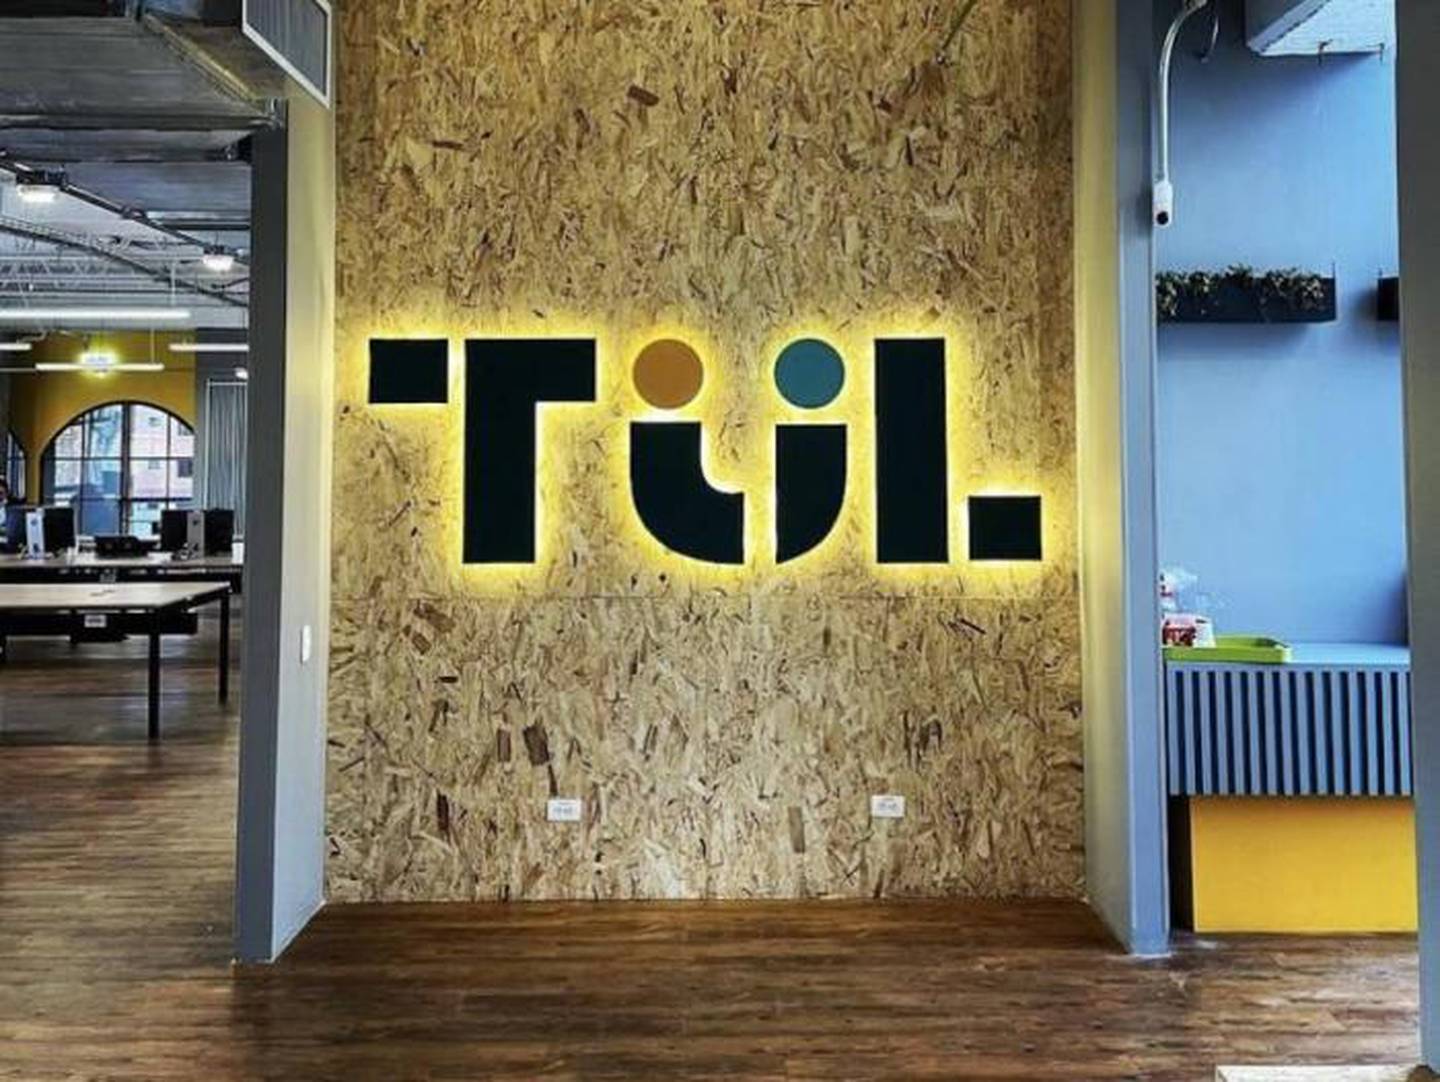 Logo de Tul